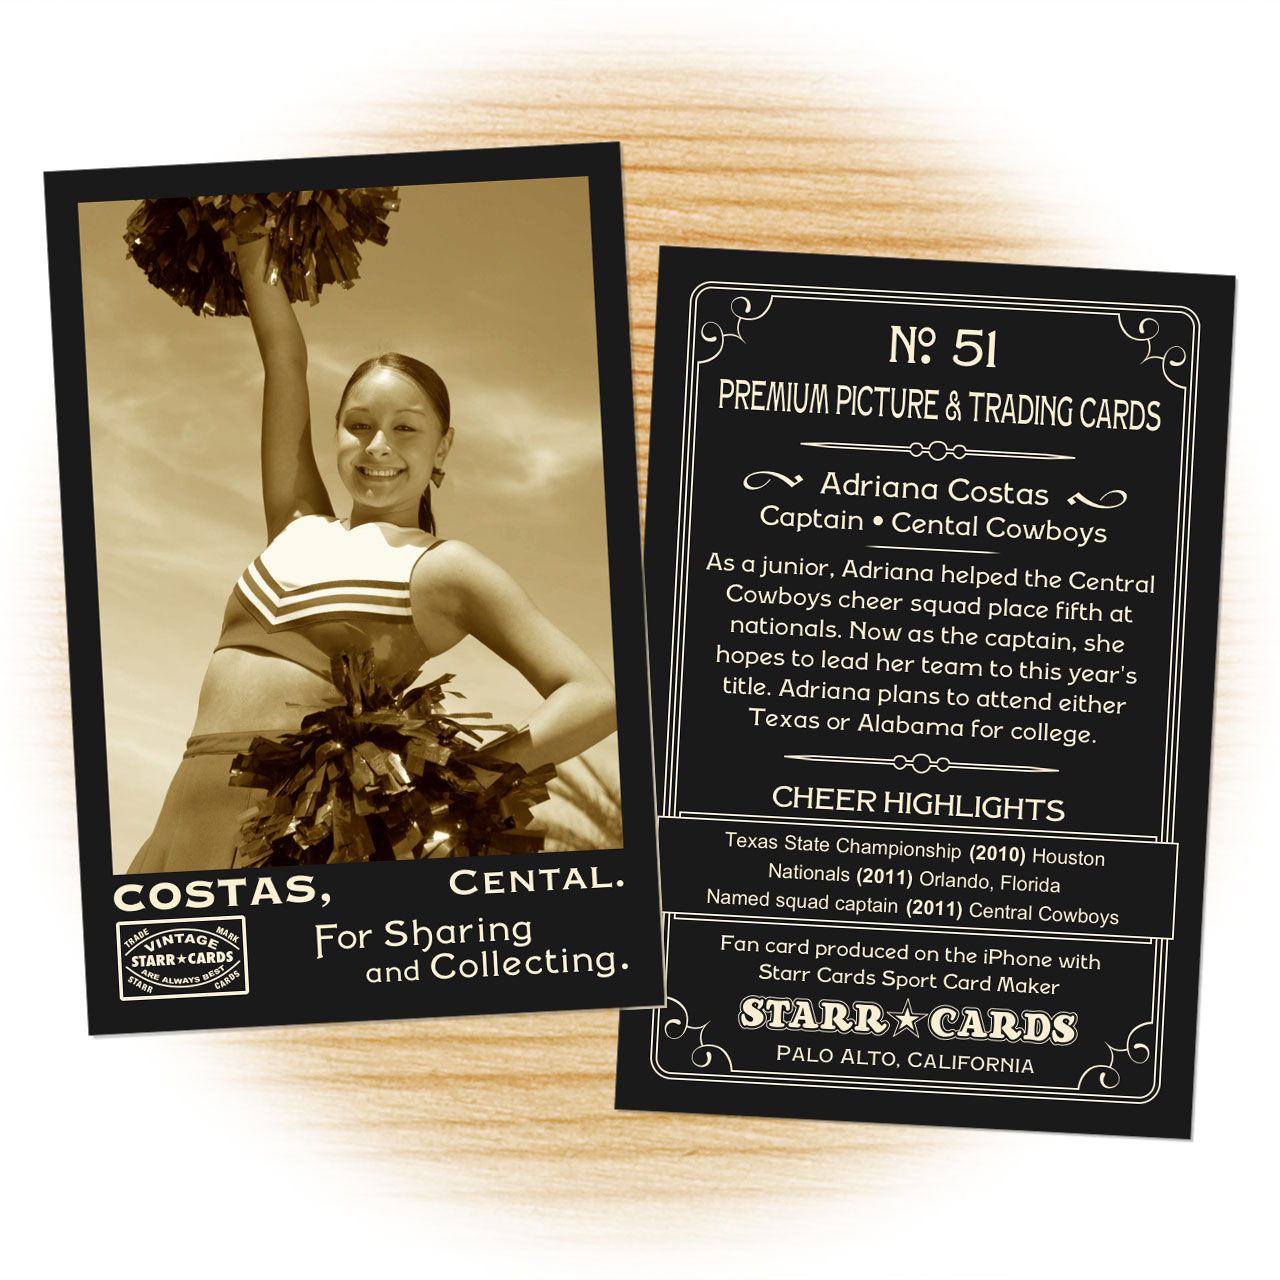 Cheerleader card template from Starr Cards Cheerleader Card Maker.